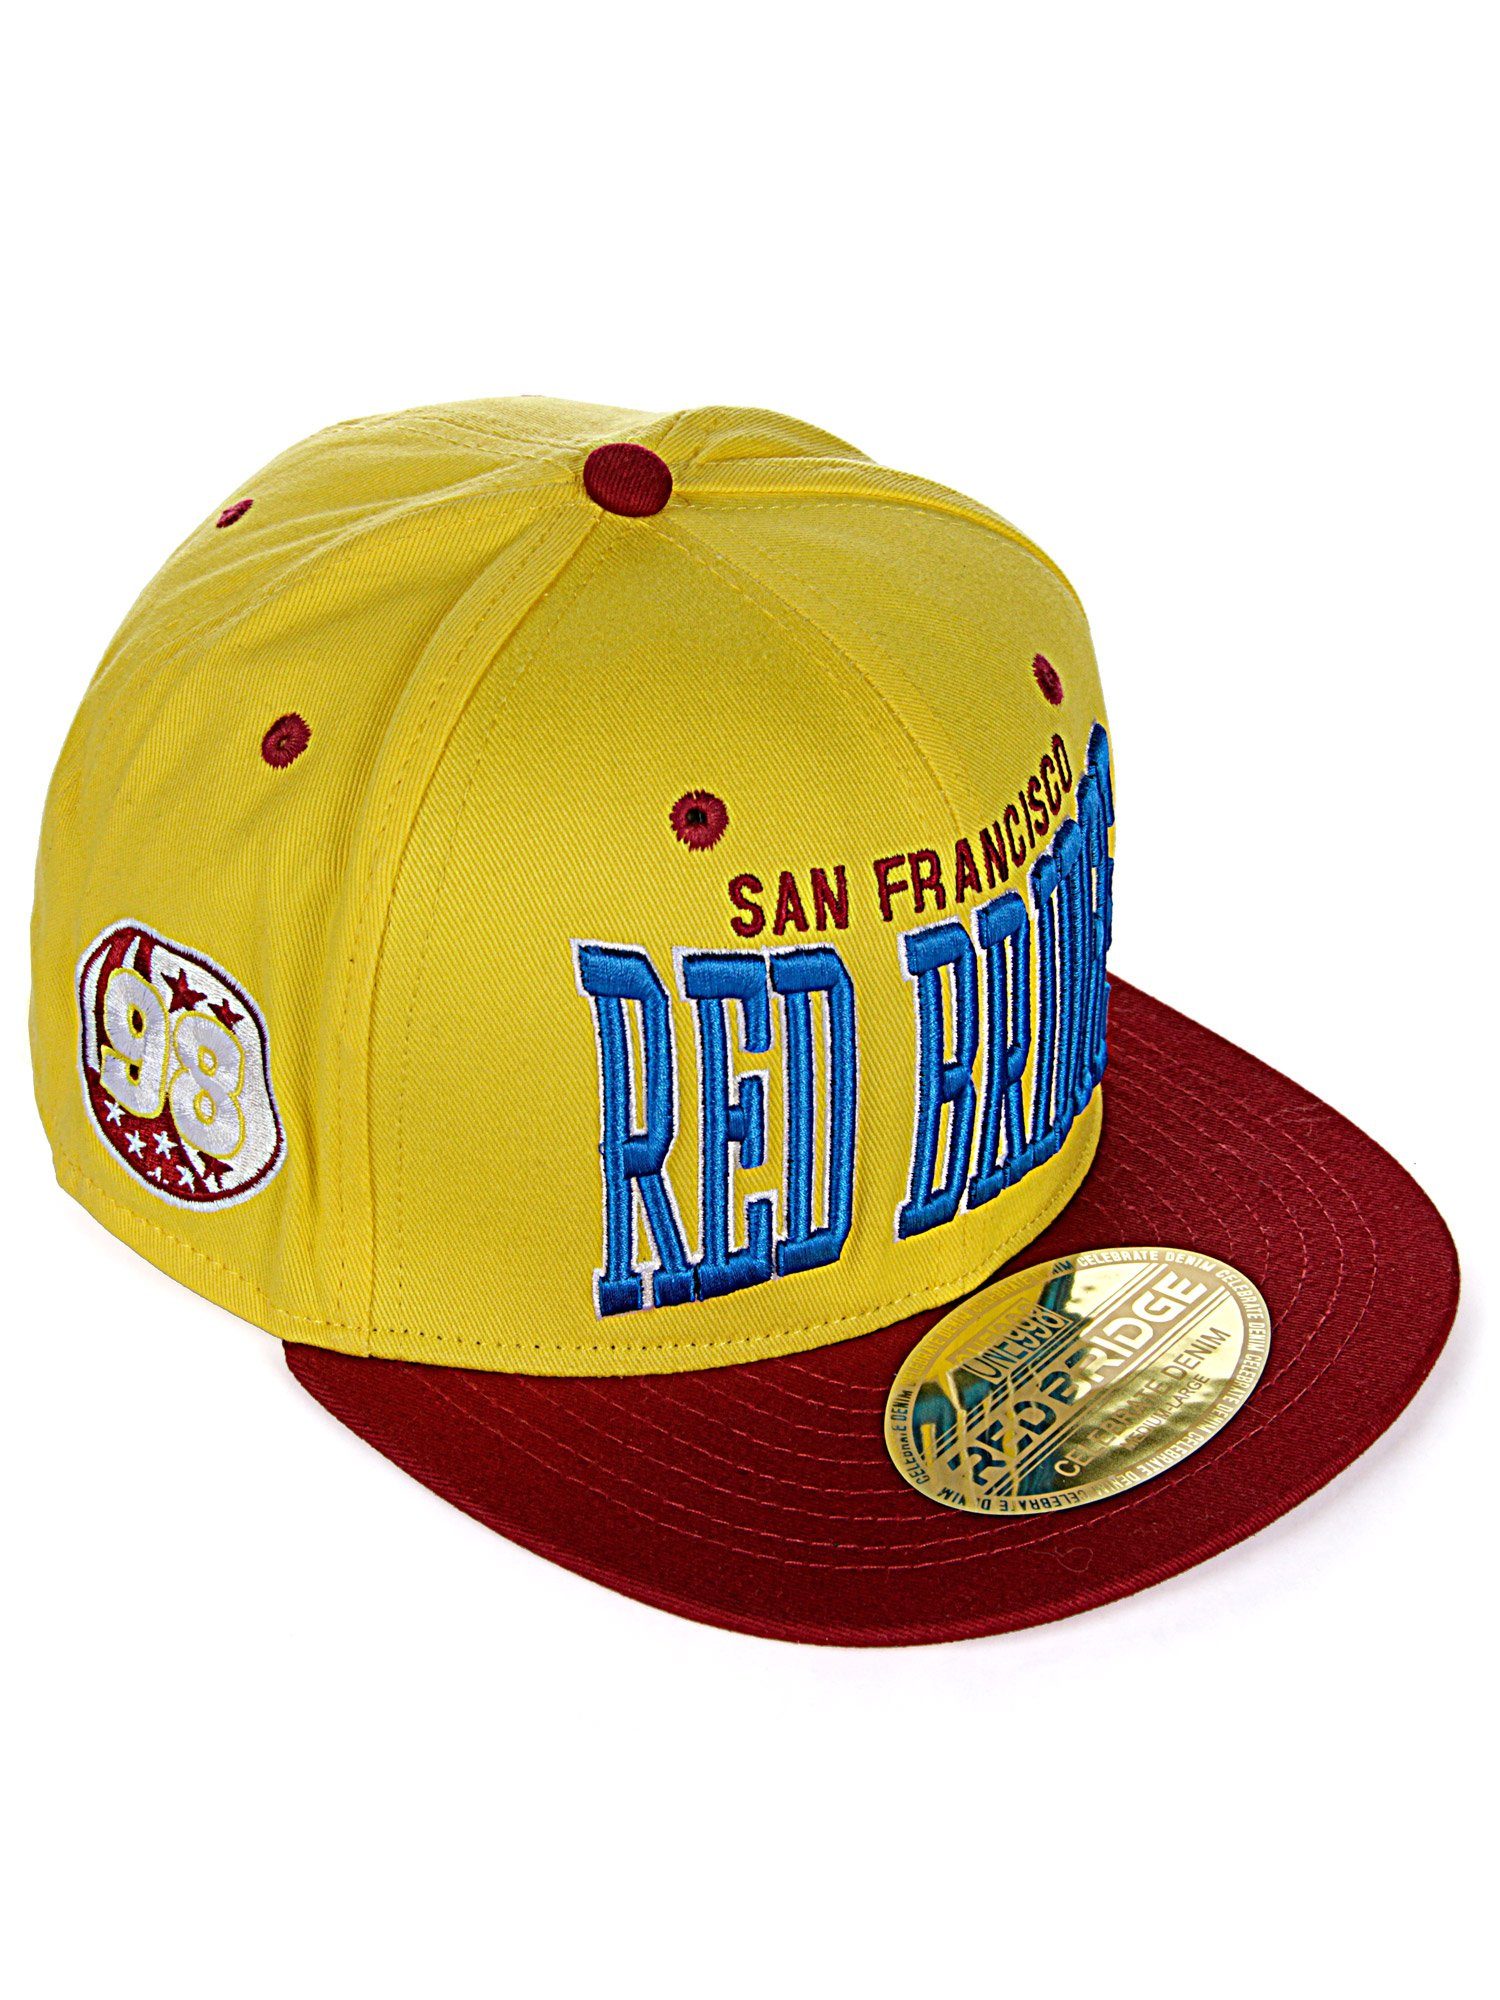 Durham gelb-rot Baseball RedBridge mit kontrastfarbigem Cap Schirm